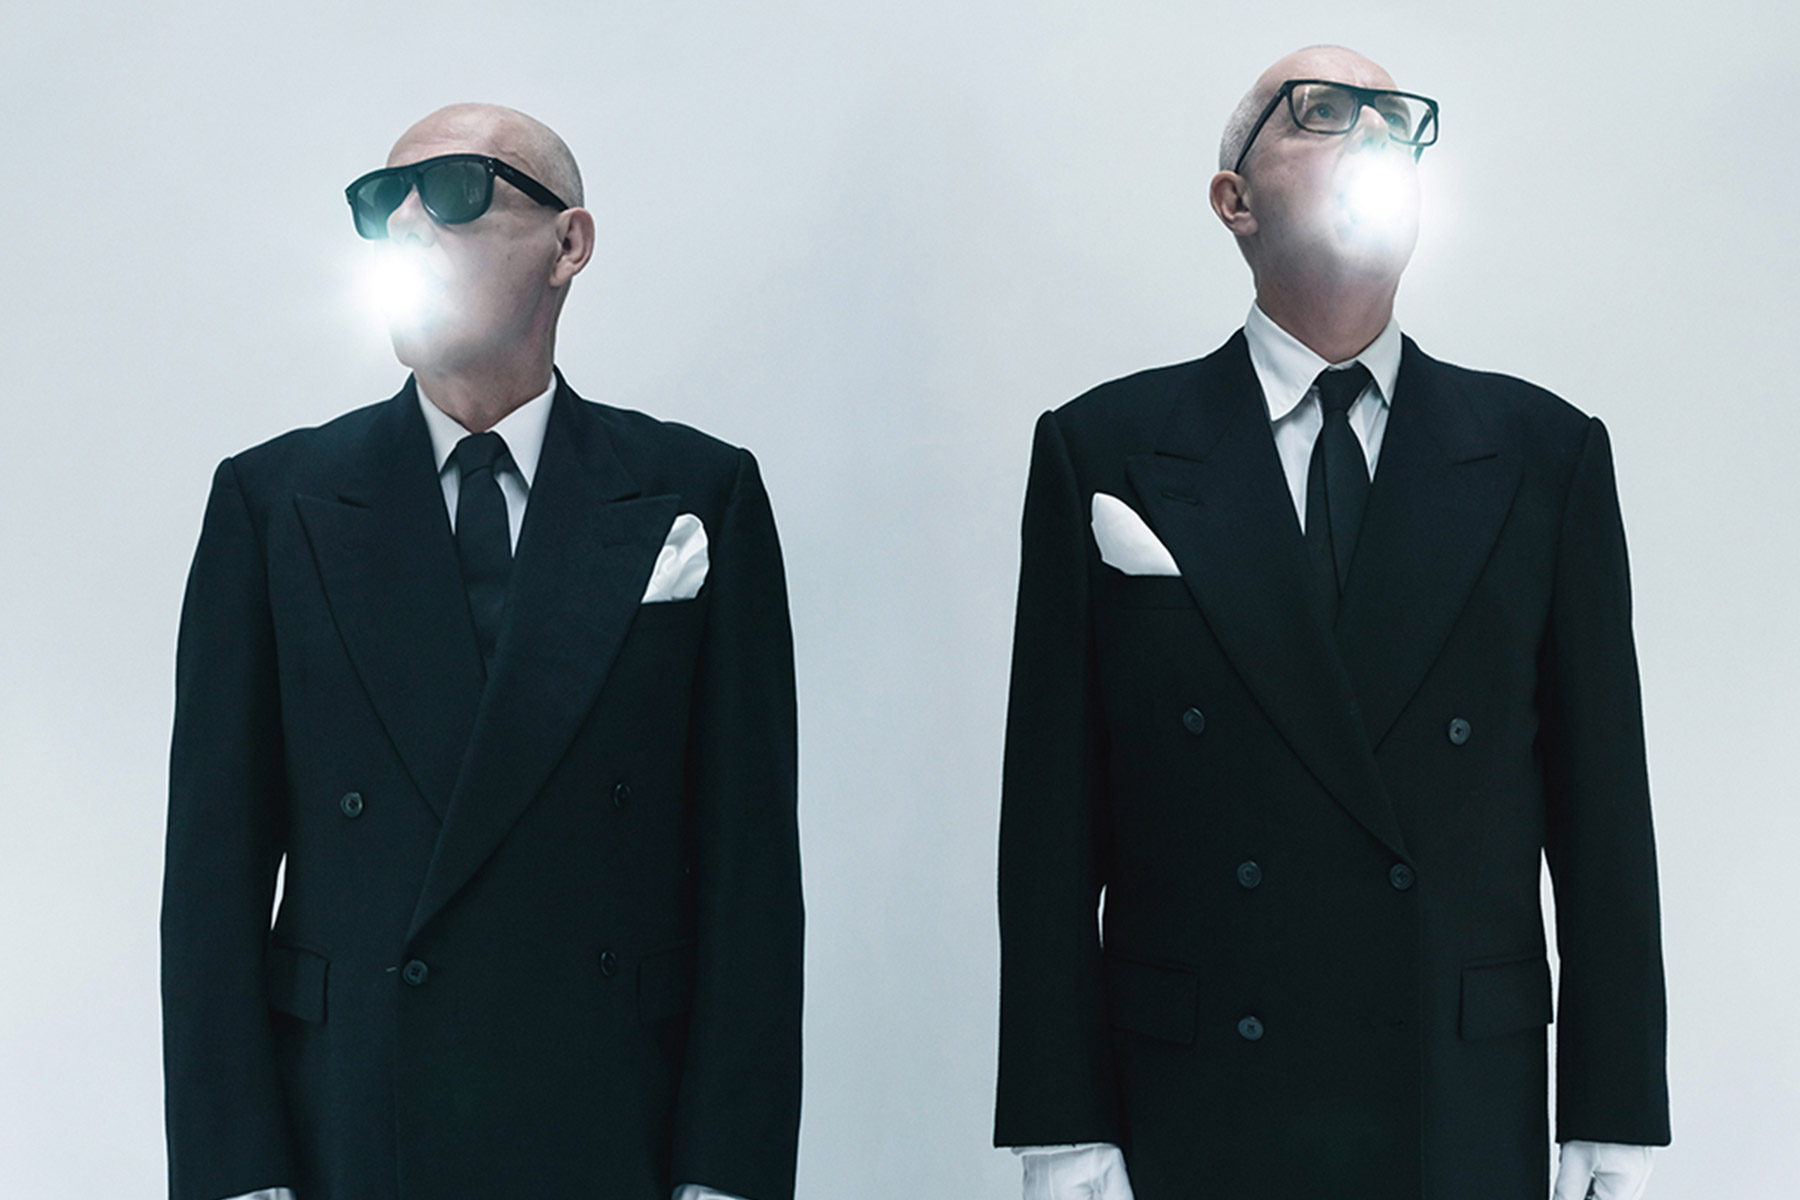 Pet Shop Boys announce ‘Nonetheless’ album, share first single